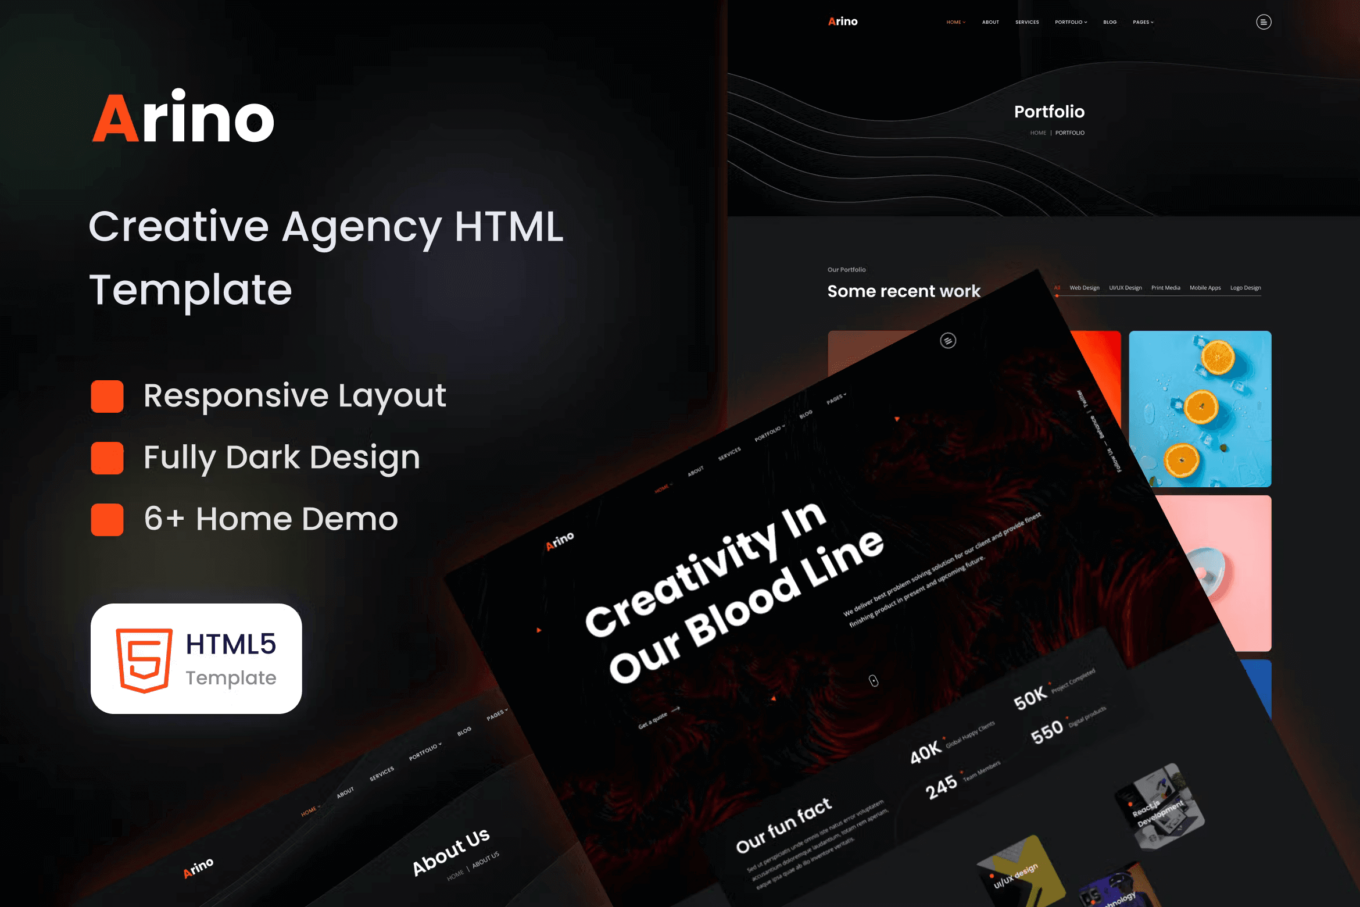 Arino - Creative Agency Template by laralink

